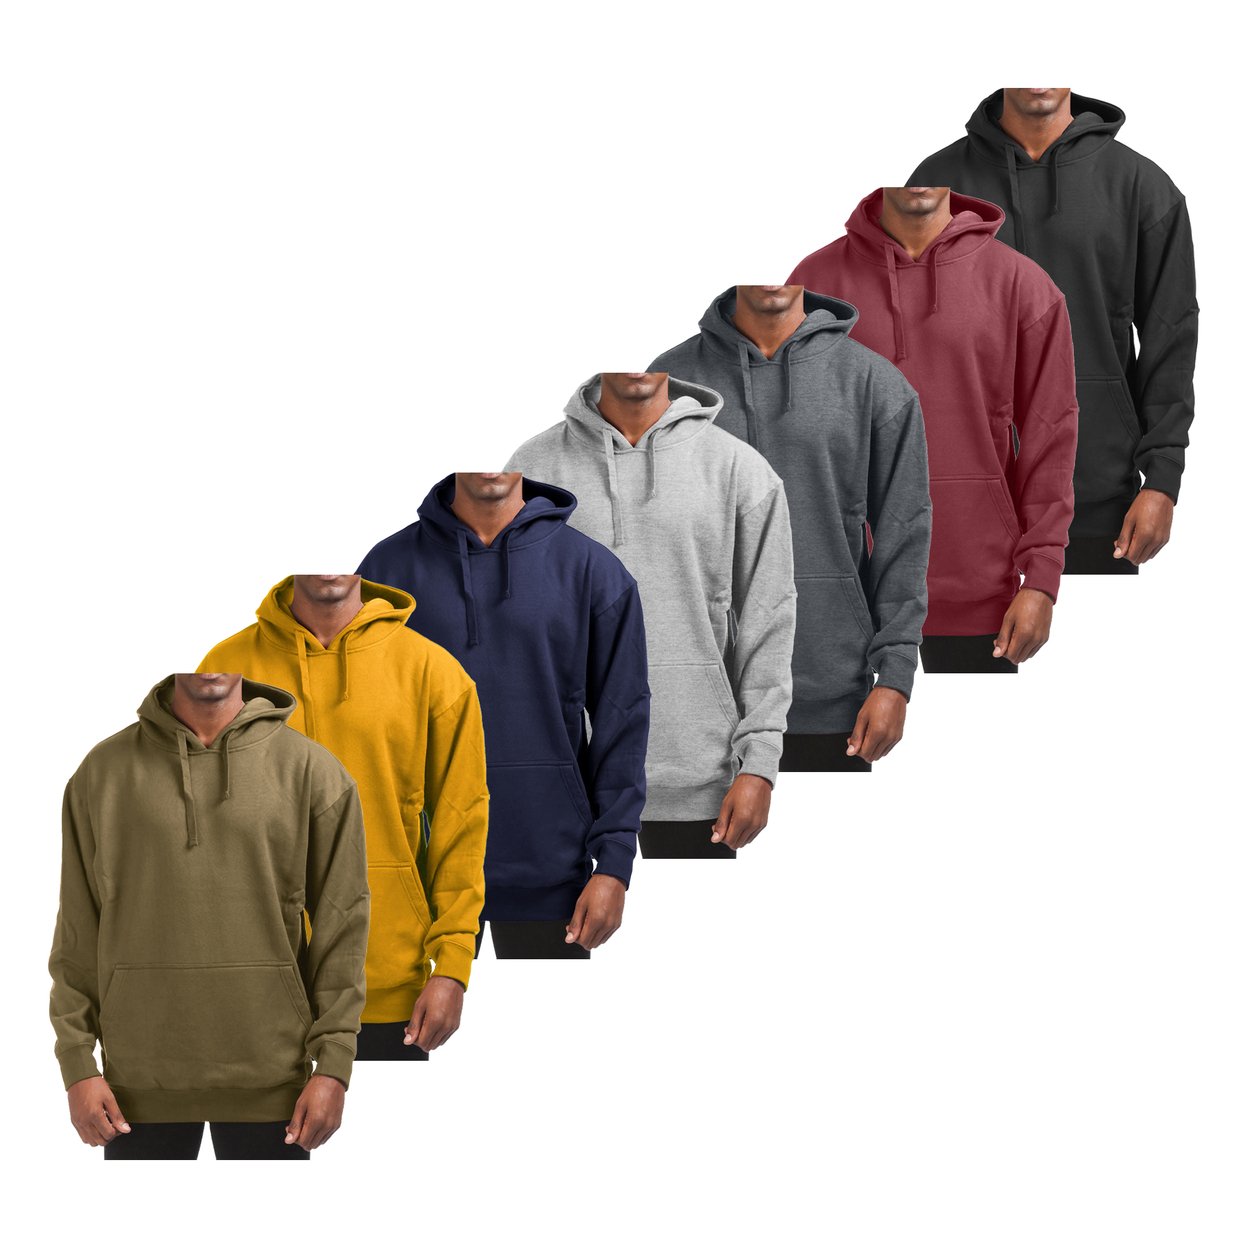 2-Pack: Men's Super-Soft Winter Warm Cotton-Blend Fleece Pullover Hoodie With Kangaroo Pocket - Black & Red, 3x-large